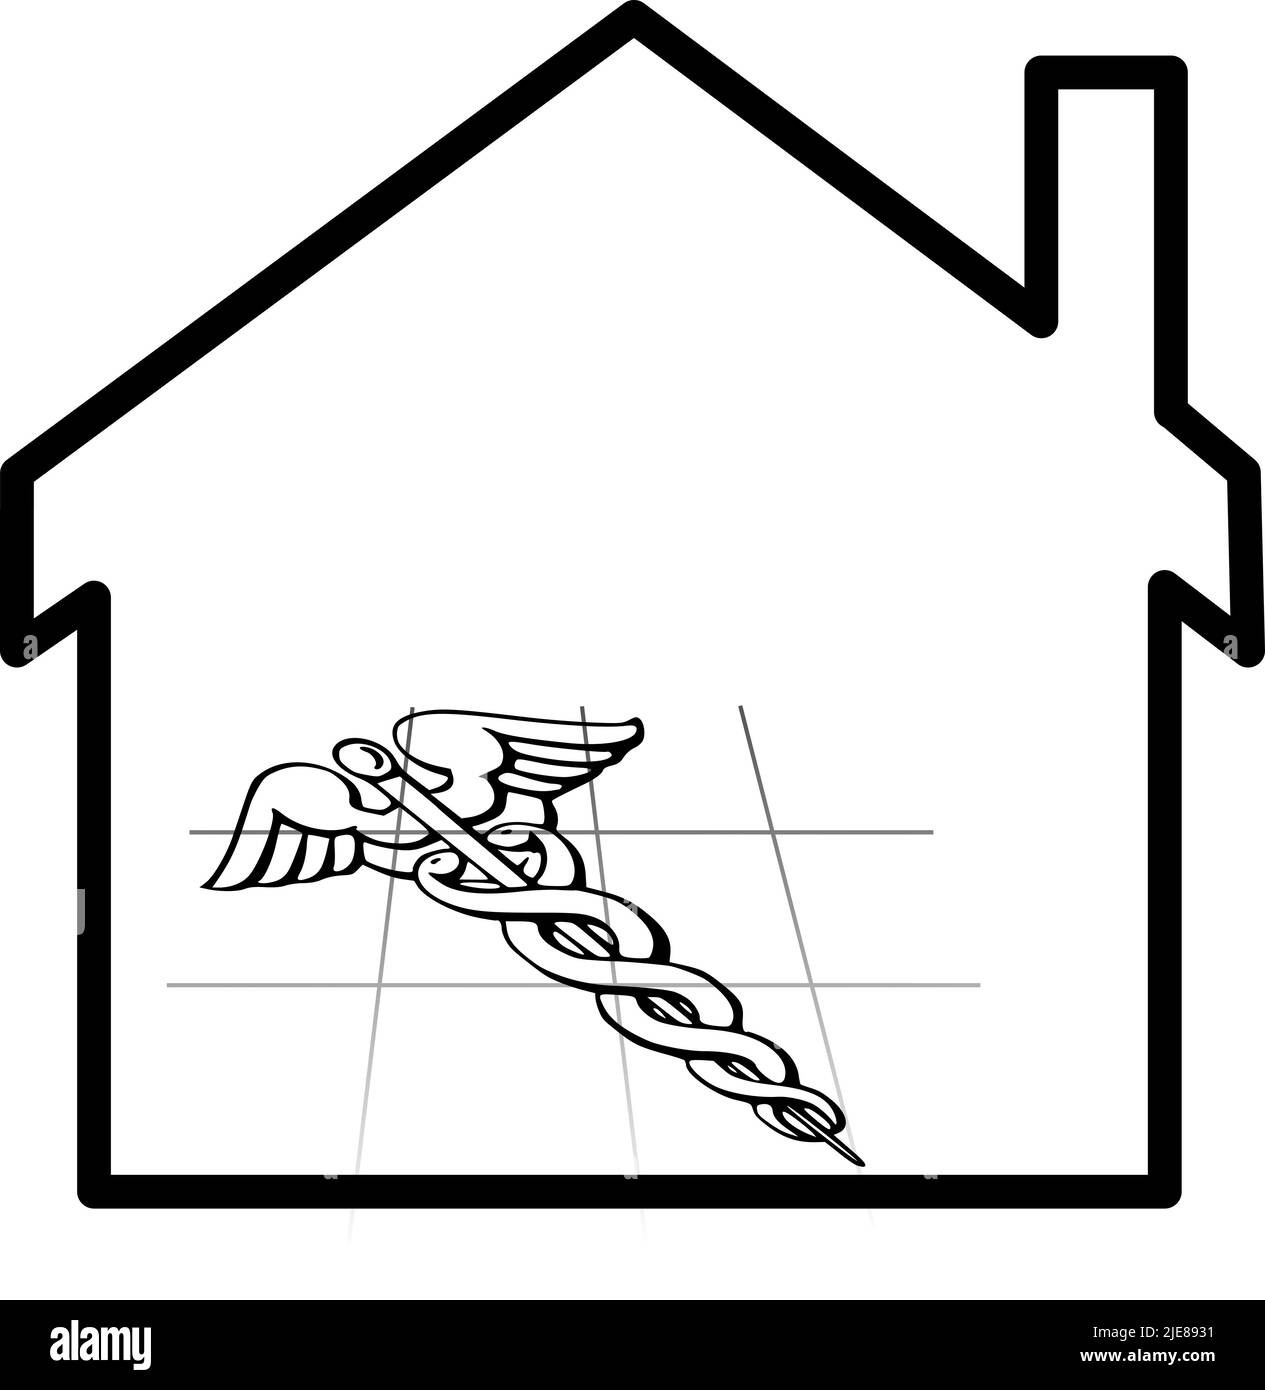 Health, hospital and doctors. Illustration Stock Photo - Alamy